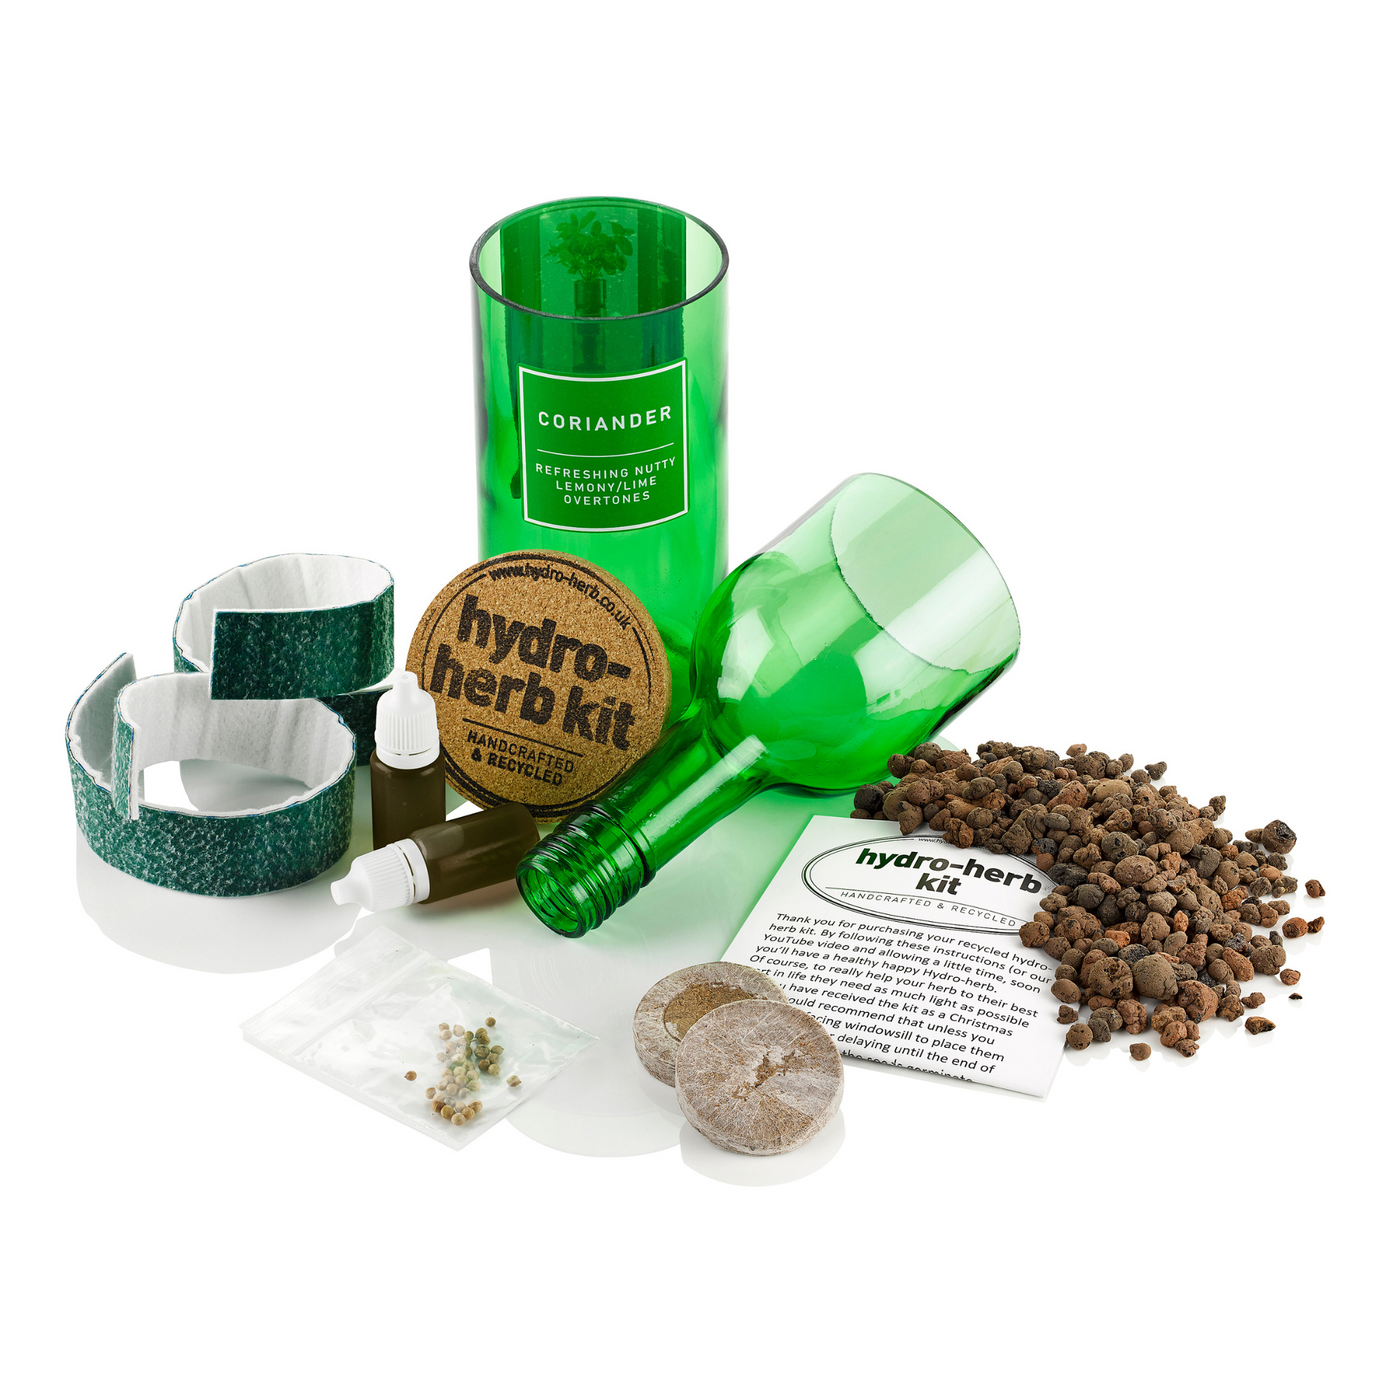 Hydro-Herb Coriander Kit